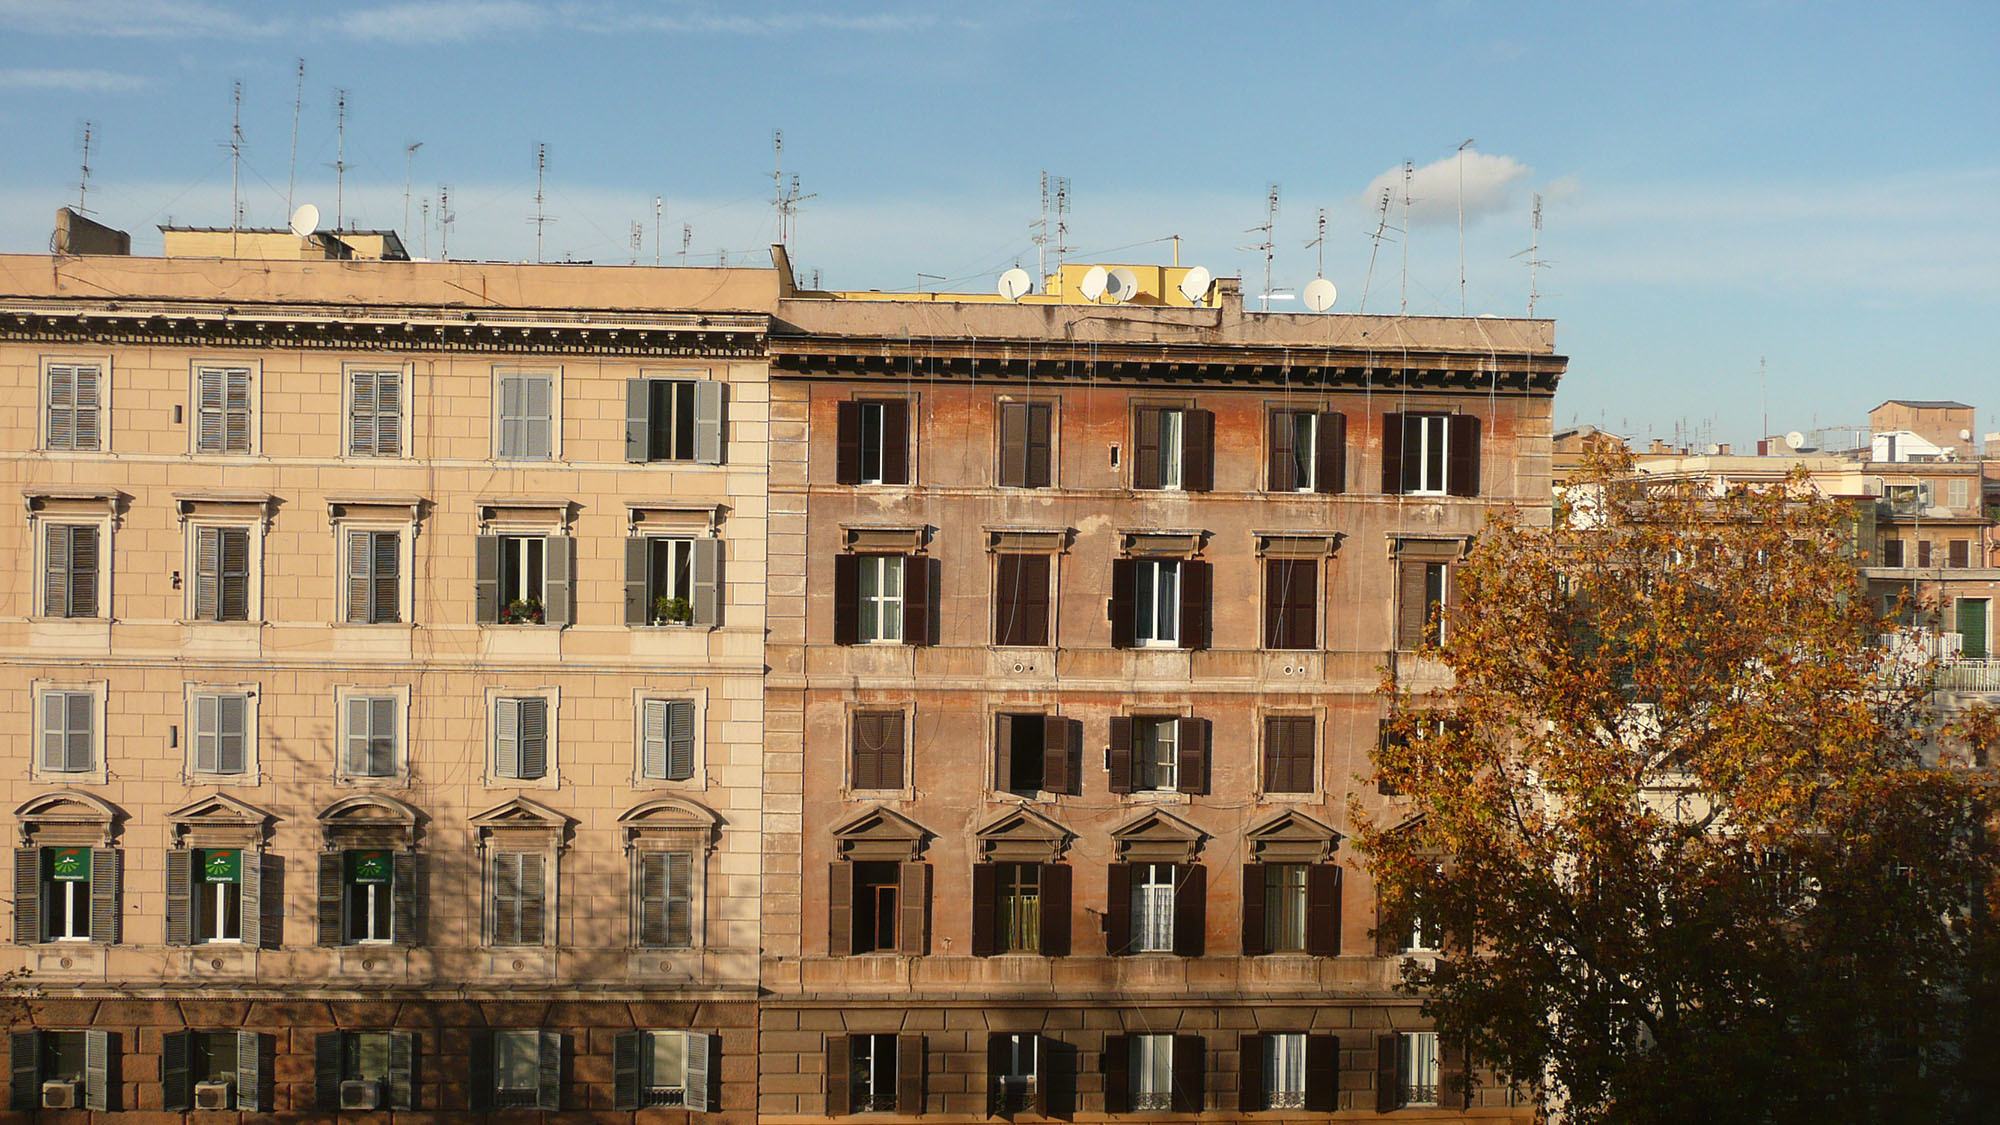 An apartment block in Rome on Viale Giulio Cesare